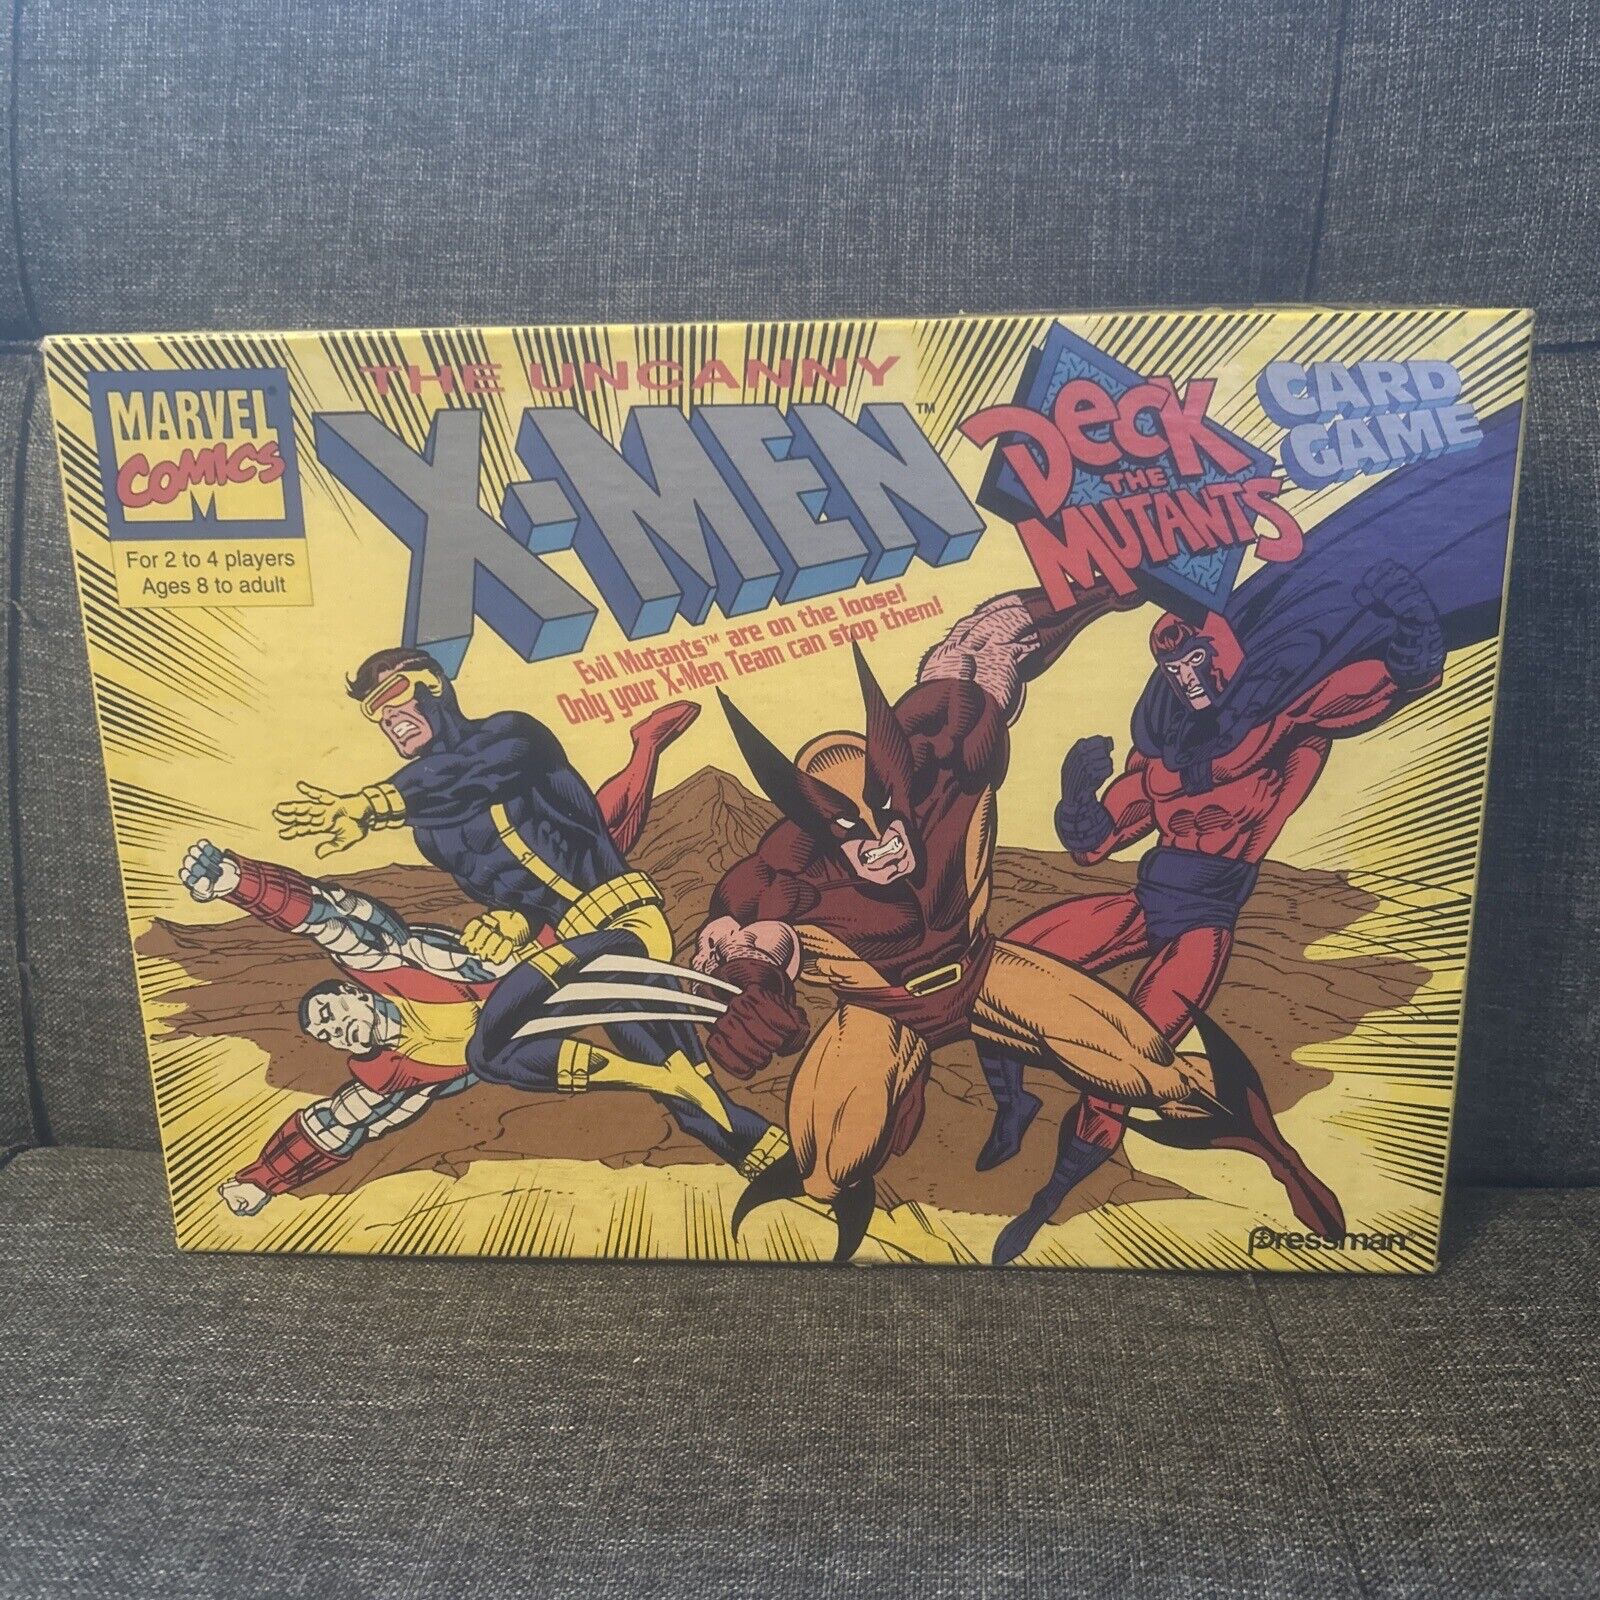 RARE Vintage 1992 Marvel Comics X-Men Deck The Mutants Card Game COMPLETE